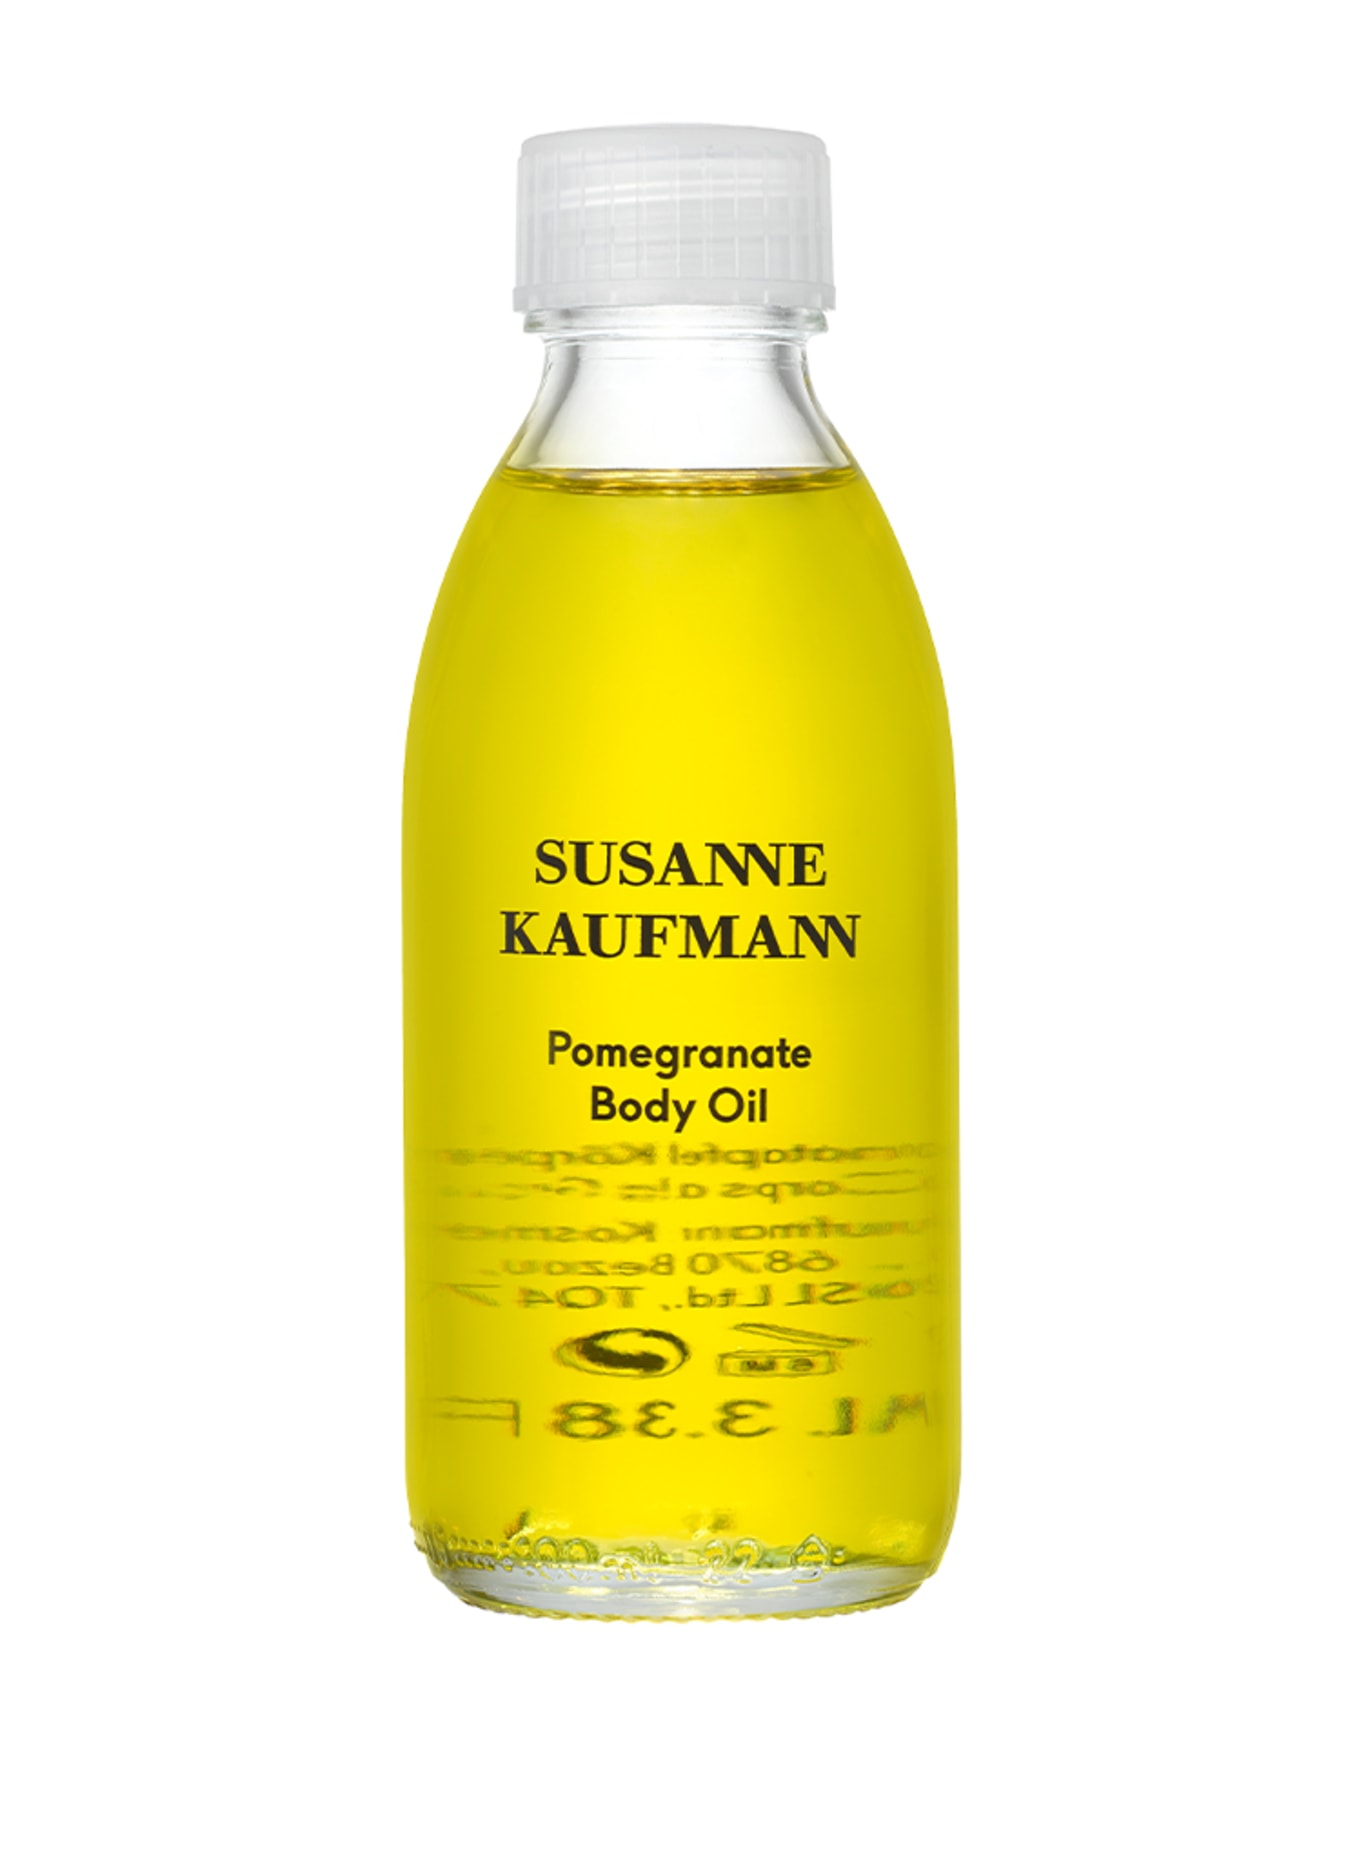 SUSANNE KAUFMANN POMEGRANATE BODY OIL (Obrázek 1)